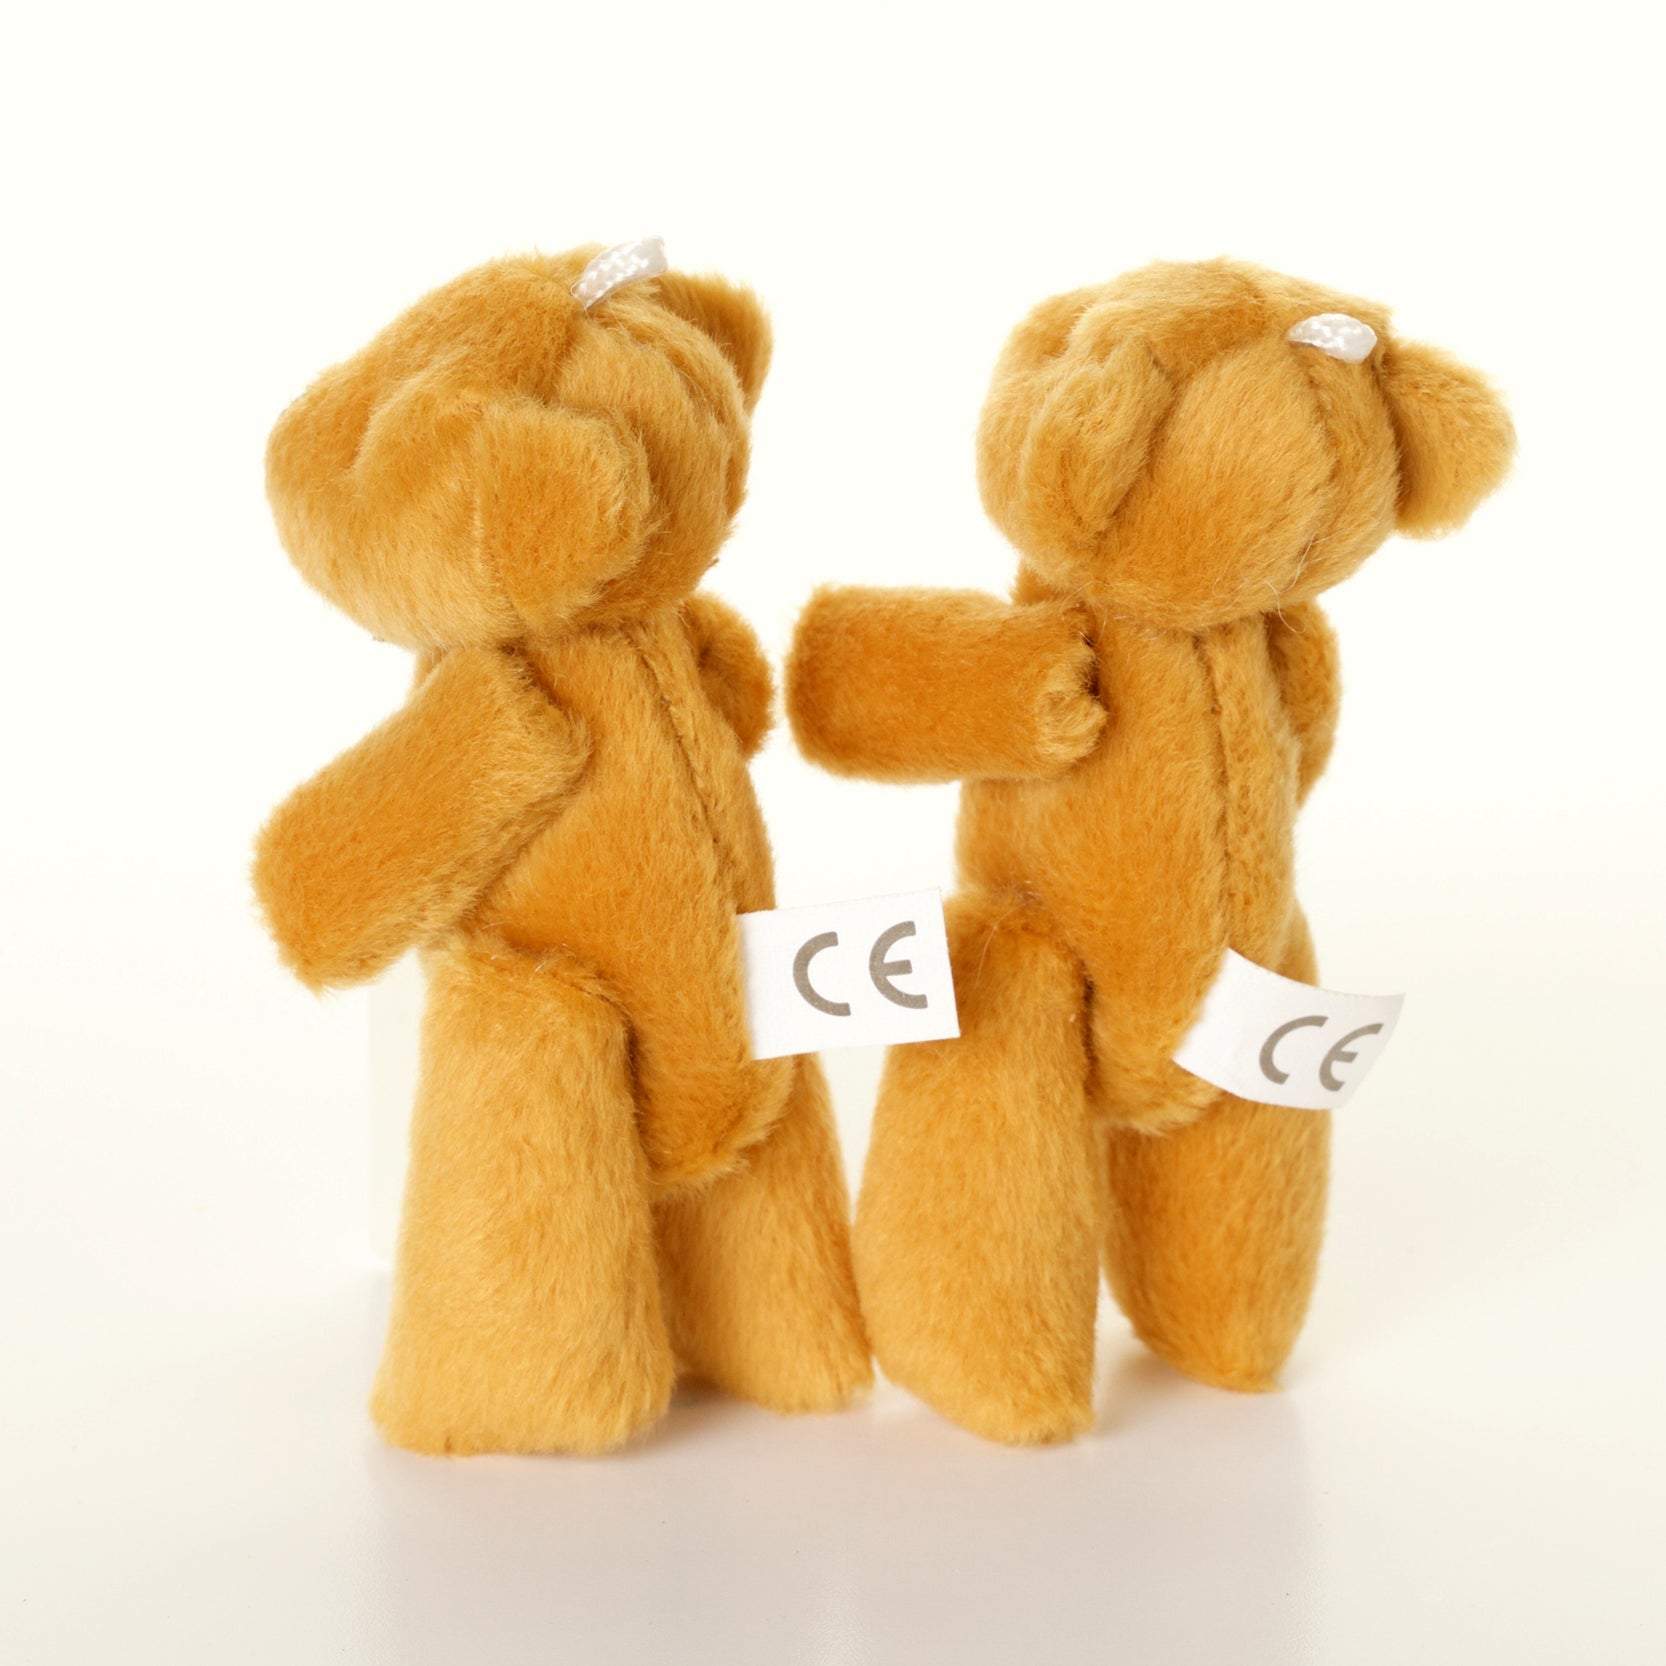 Small BROWN Teddy Bears X 70 - Cute Soft Adorable